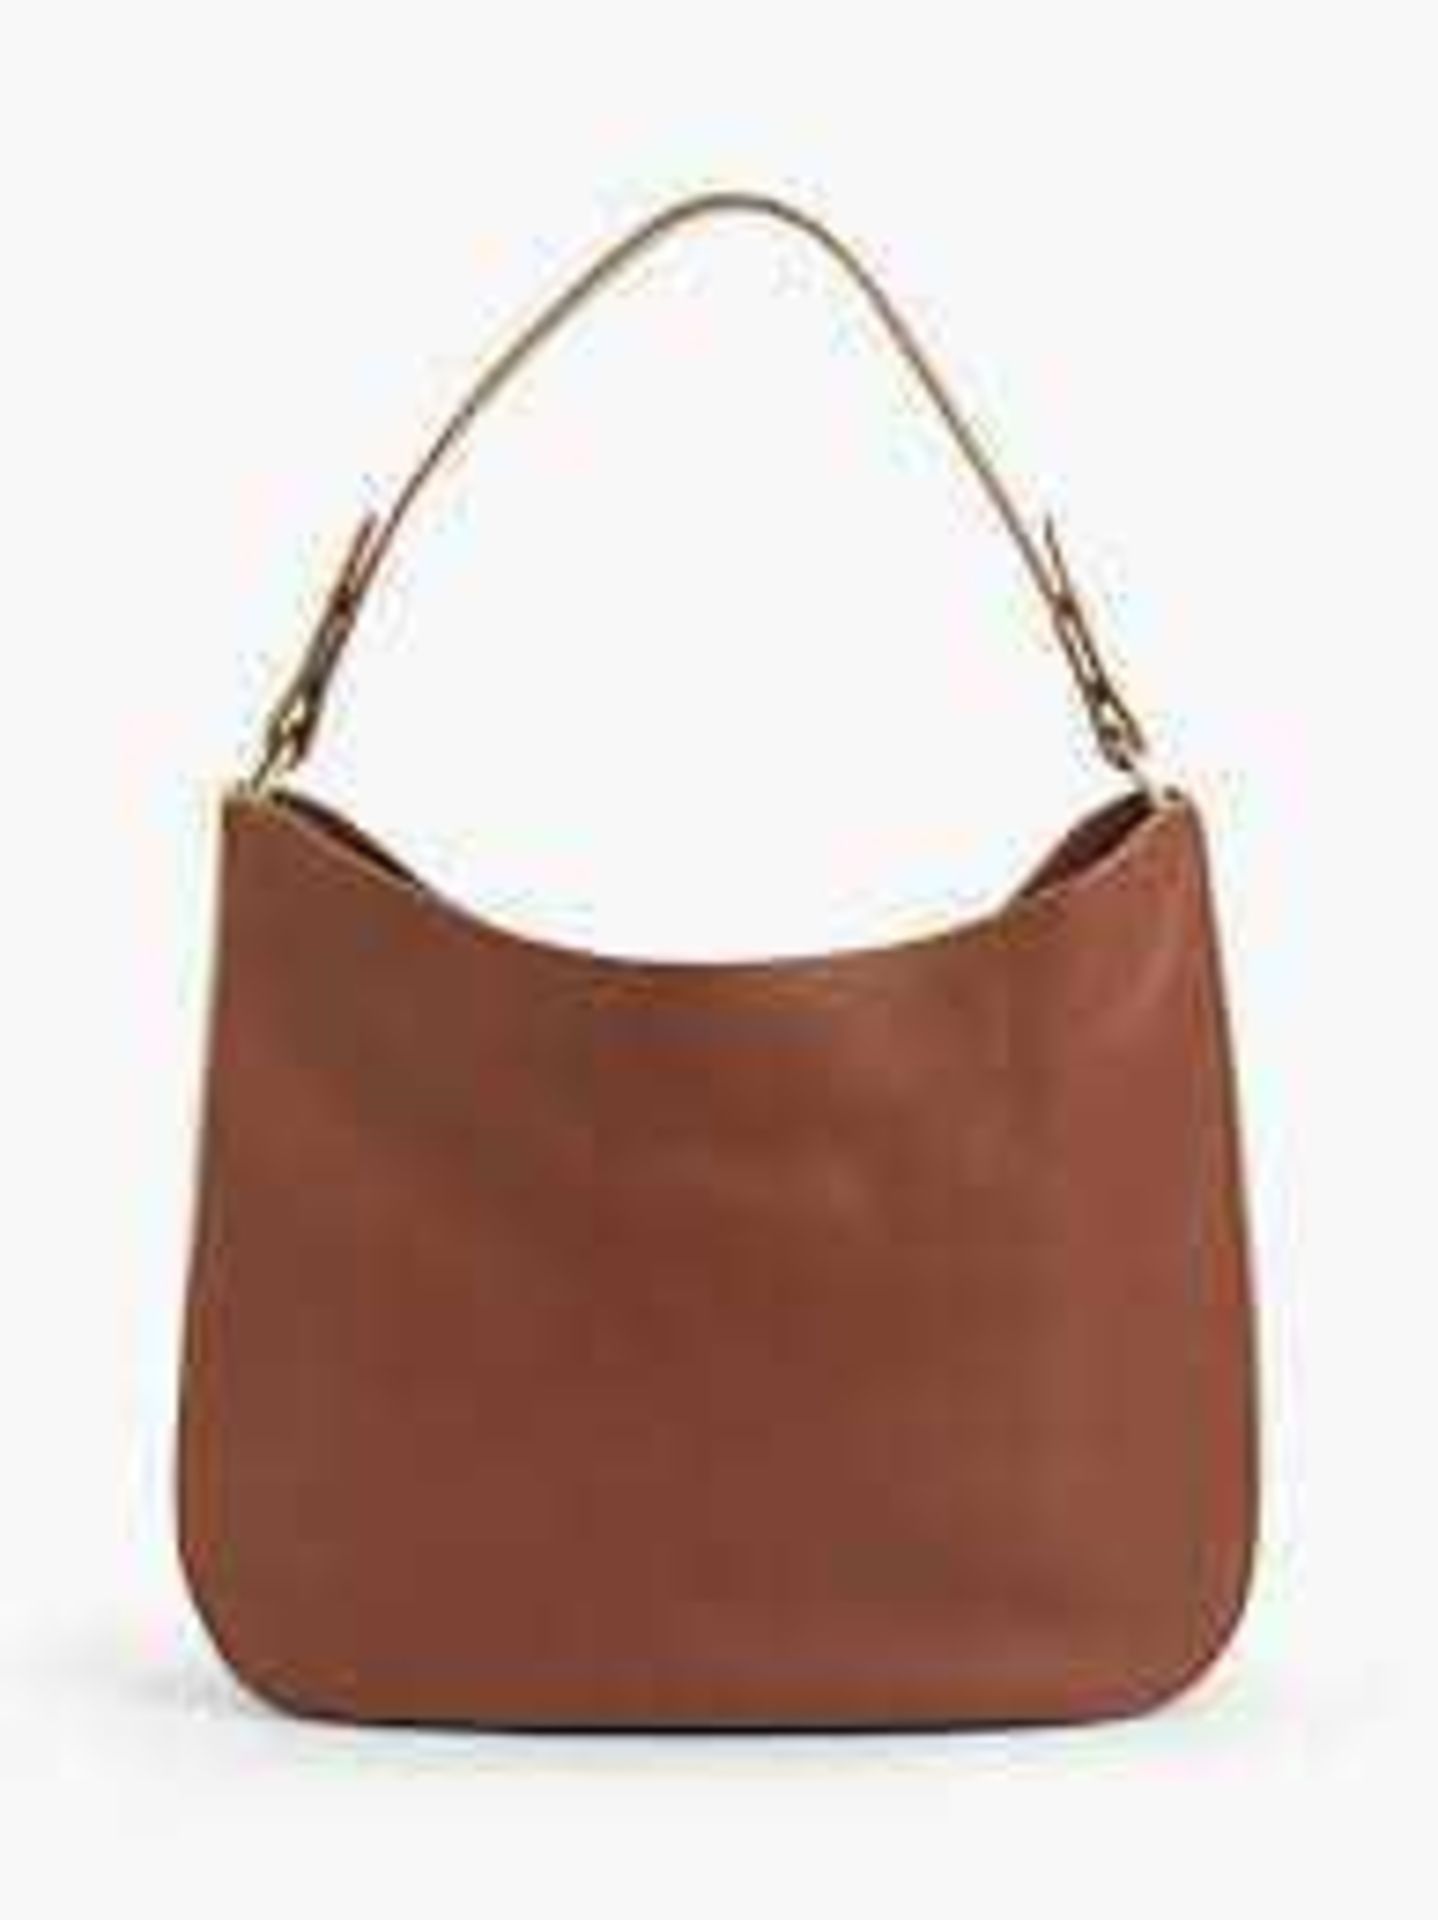 RRP £110 Each Assorted Bagged John Lewis Designer Bags - Image 2 of 2